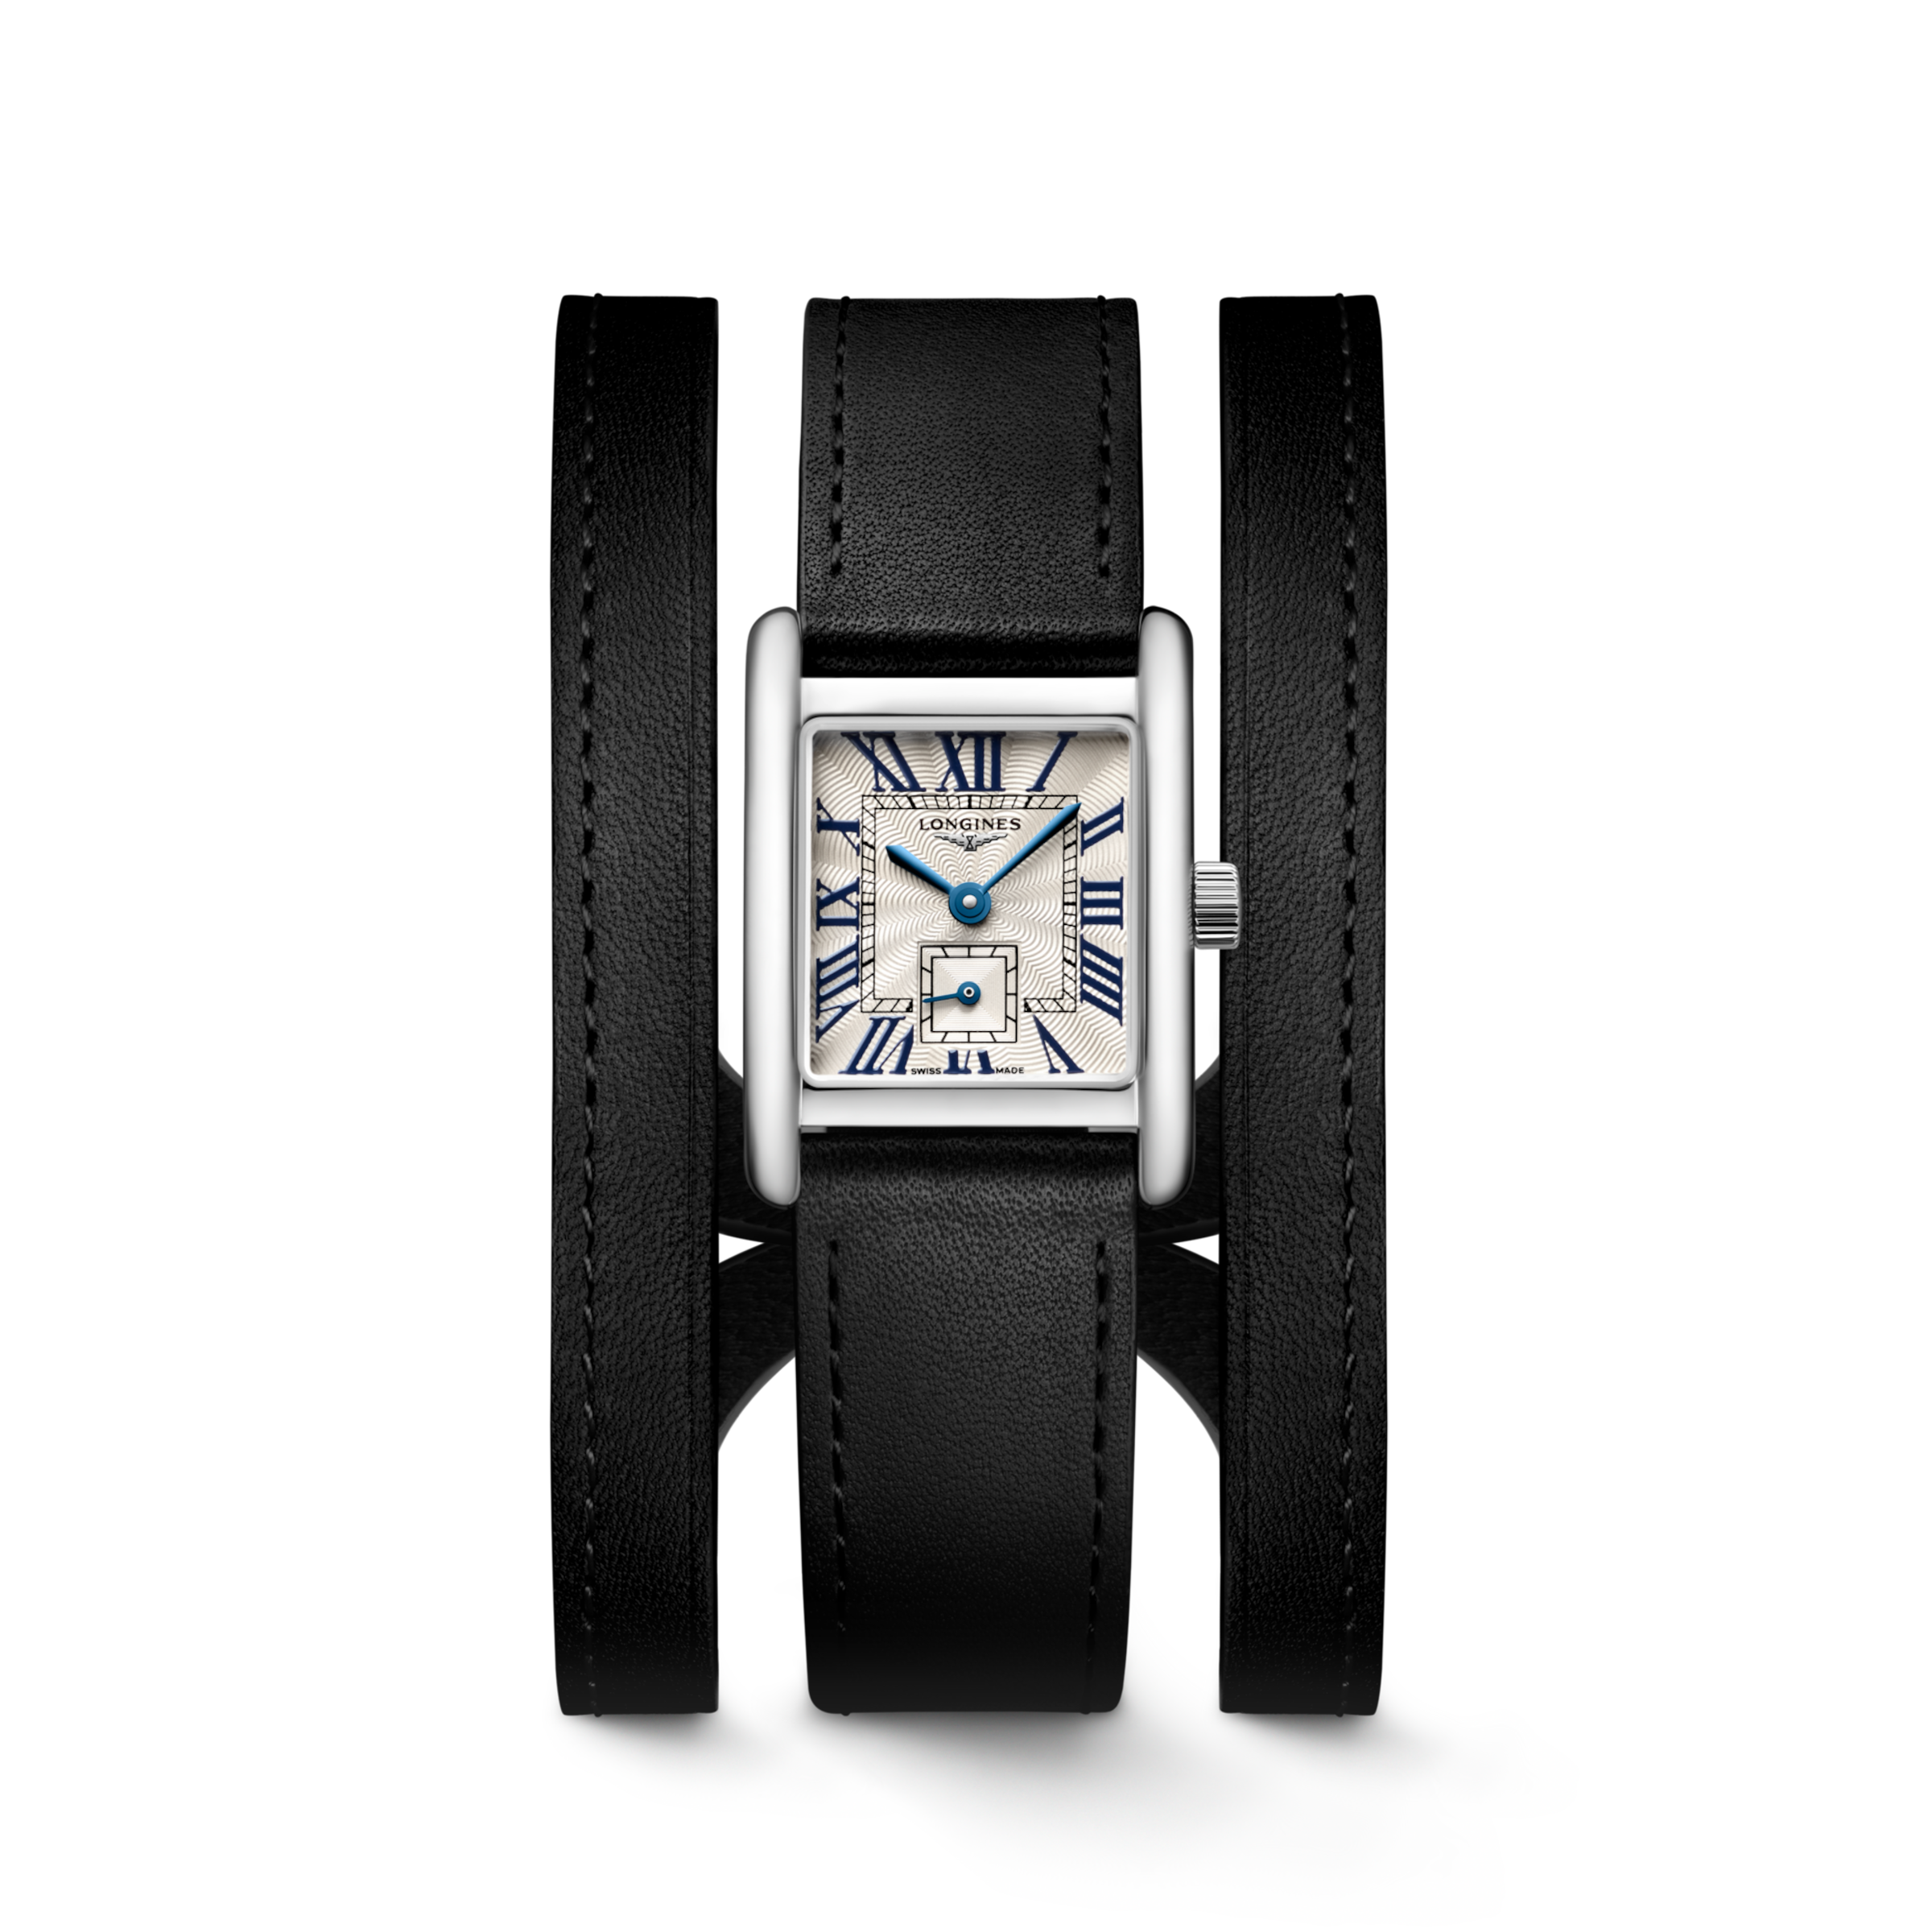 Longines MINI DOLCEVITA Quartz Stainless steel Watch - L5.200.4.71.0